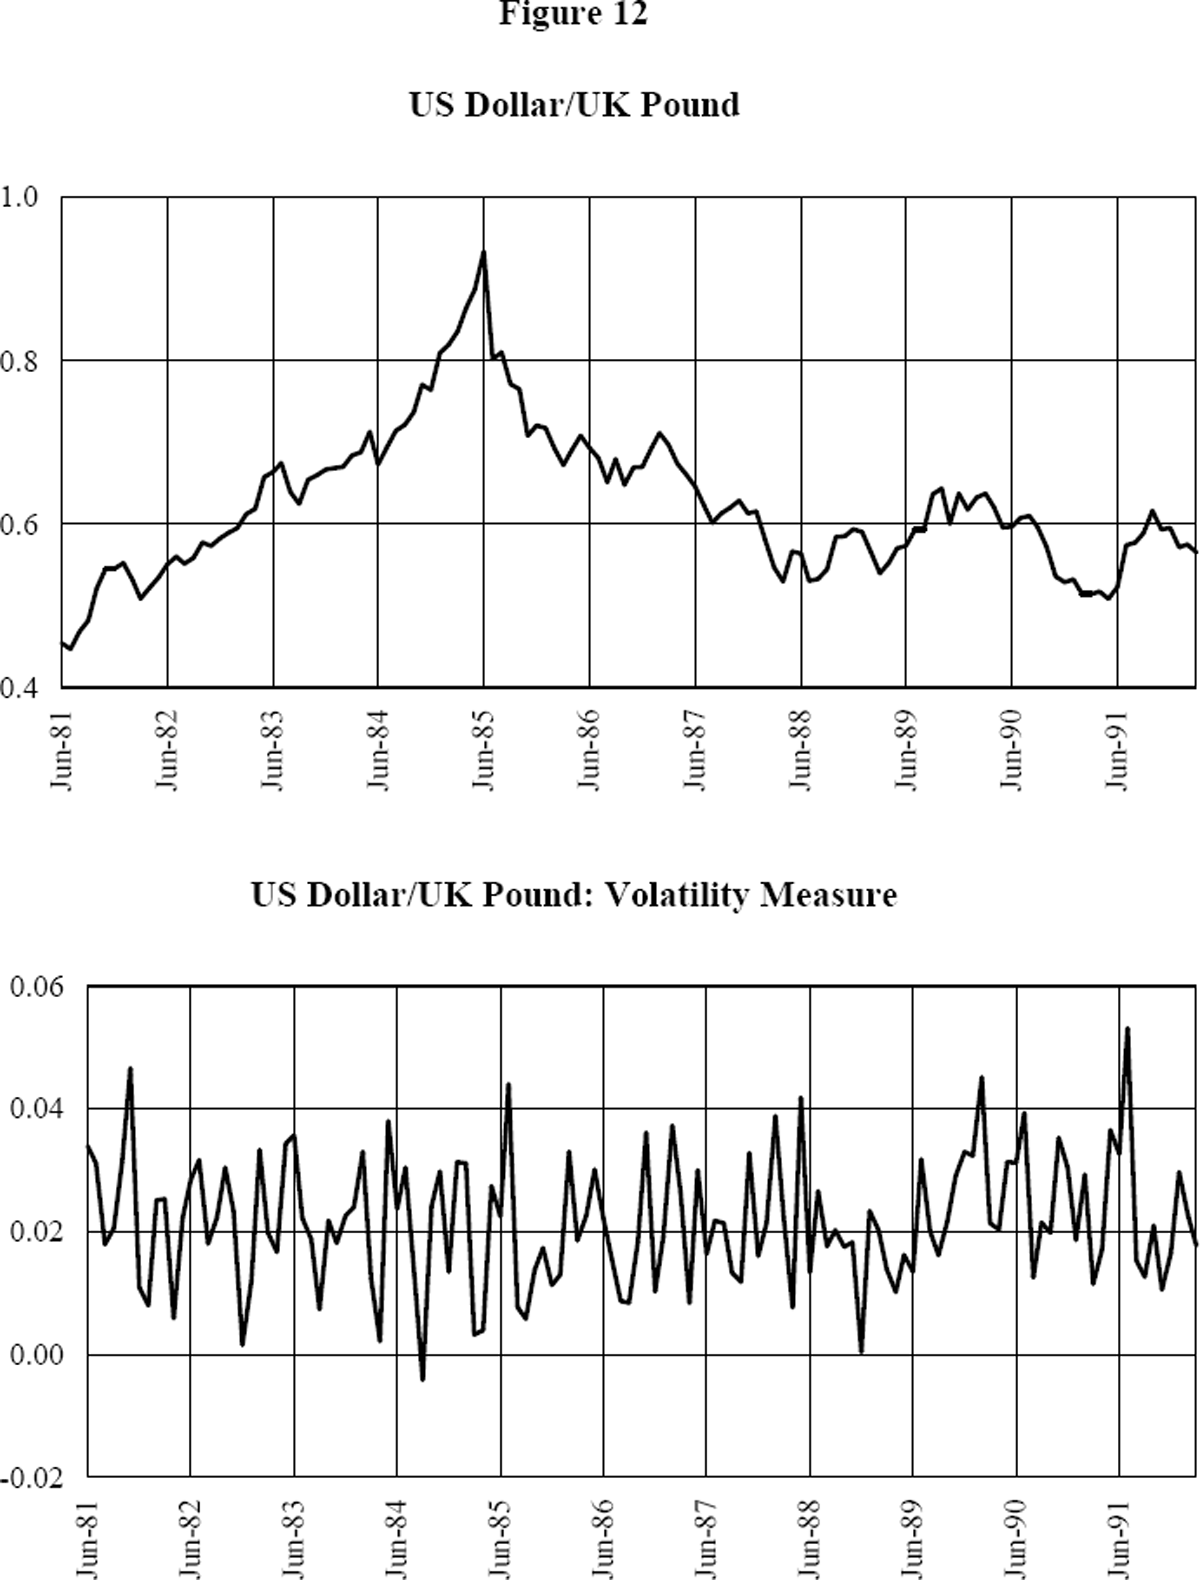 Figure 12: US Dollar/UK Pound and Volatility Measure